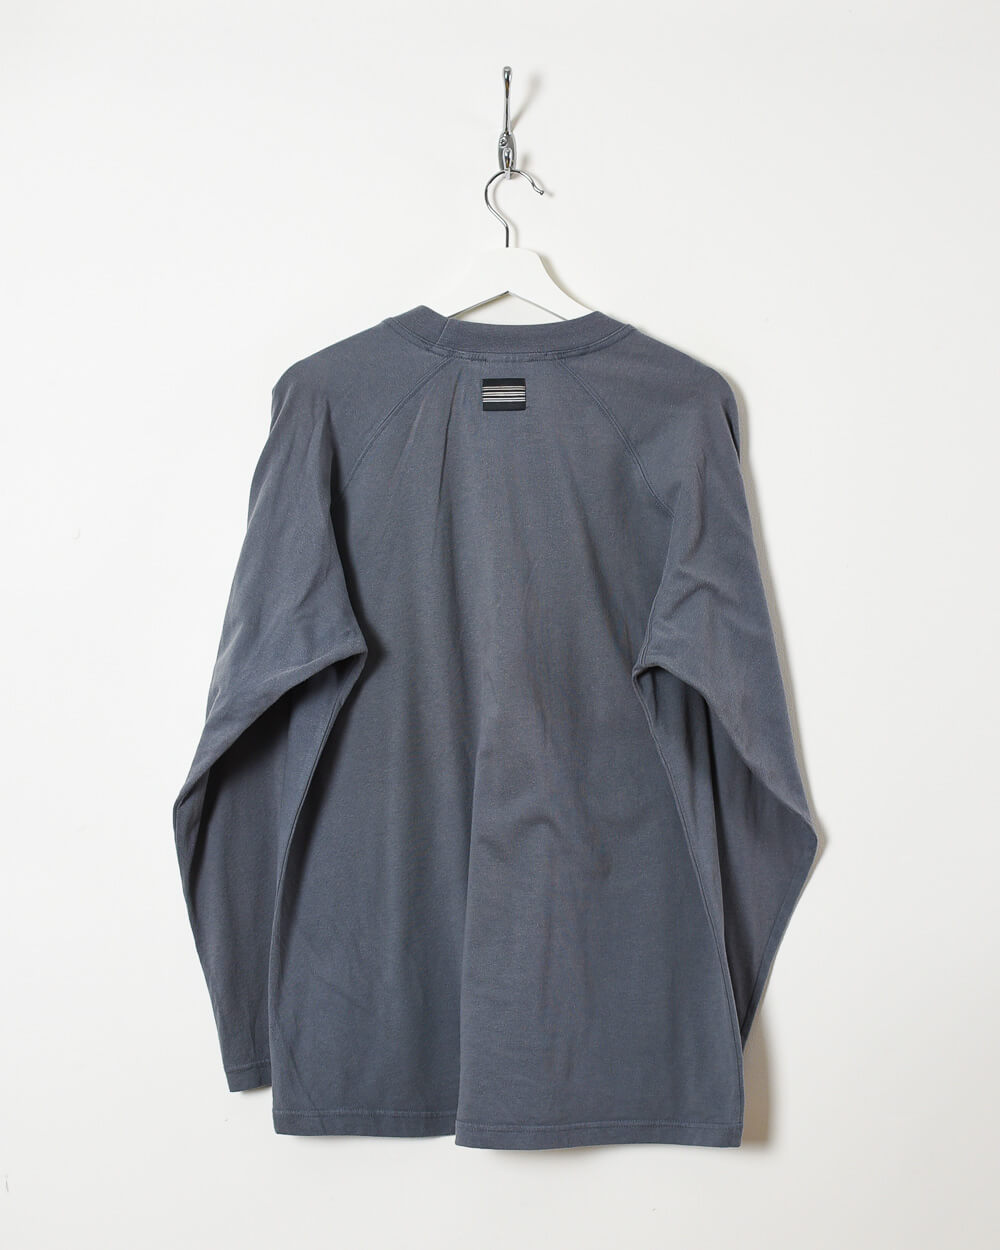 Grey Adidas Long Sleeved T-Shirt - Medium